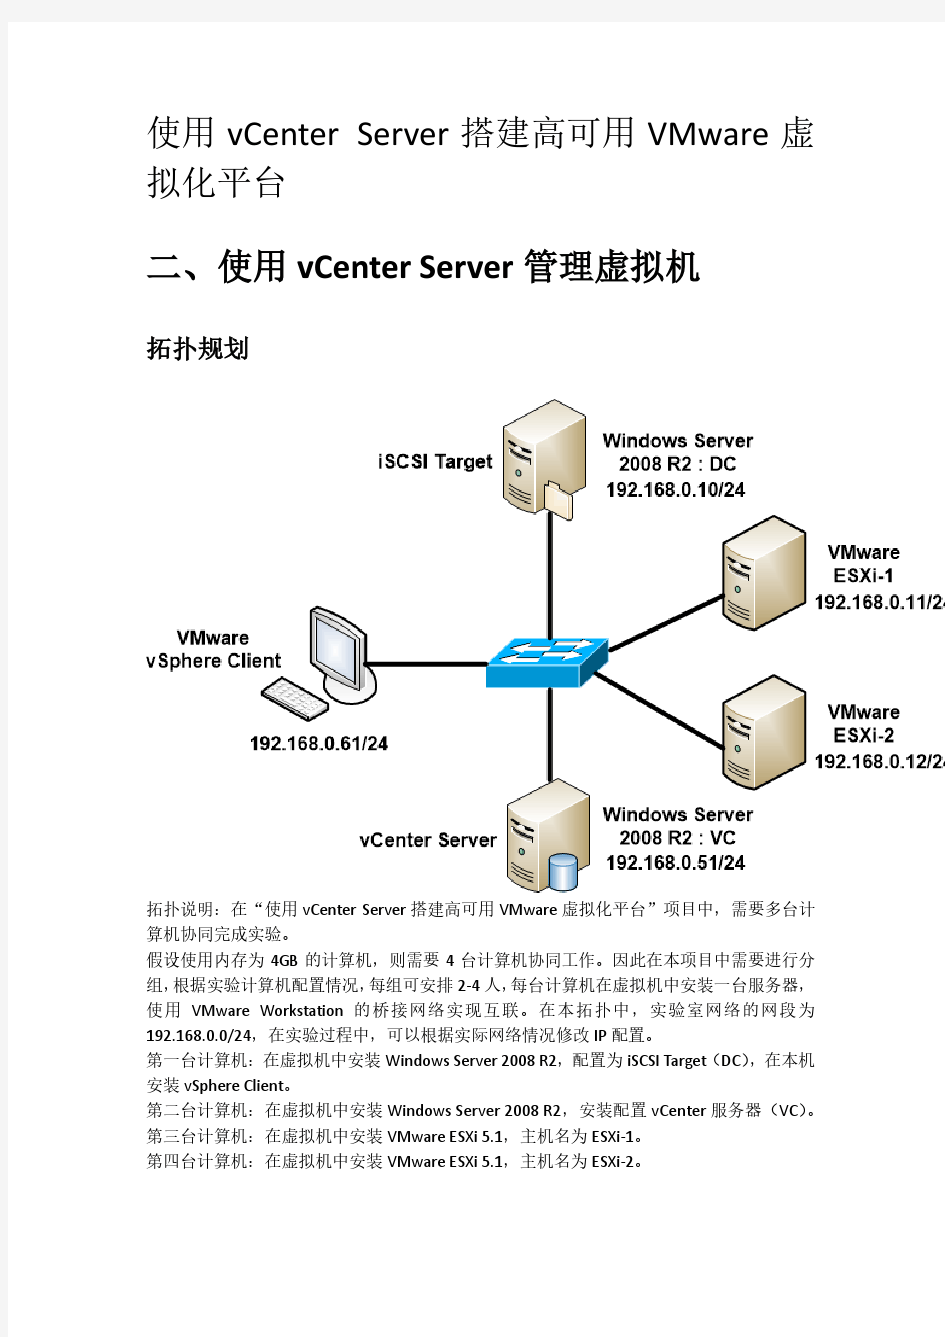 2.2.使用vCenter Server管理虚拟机